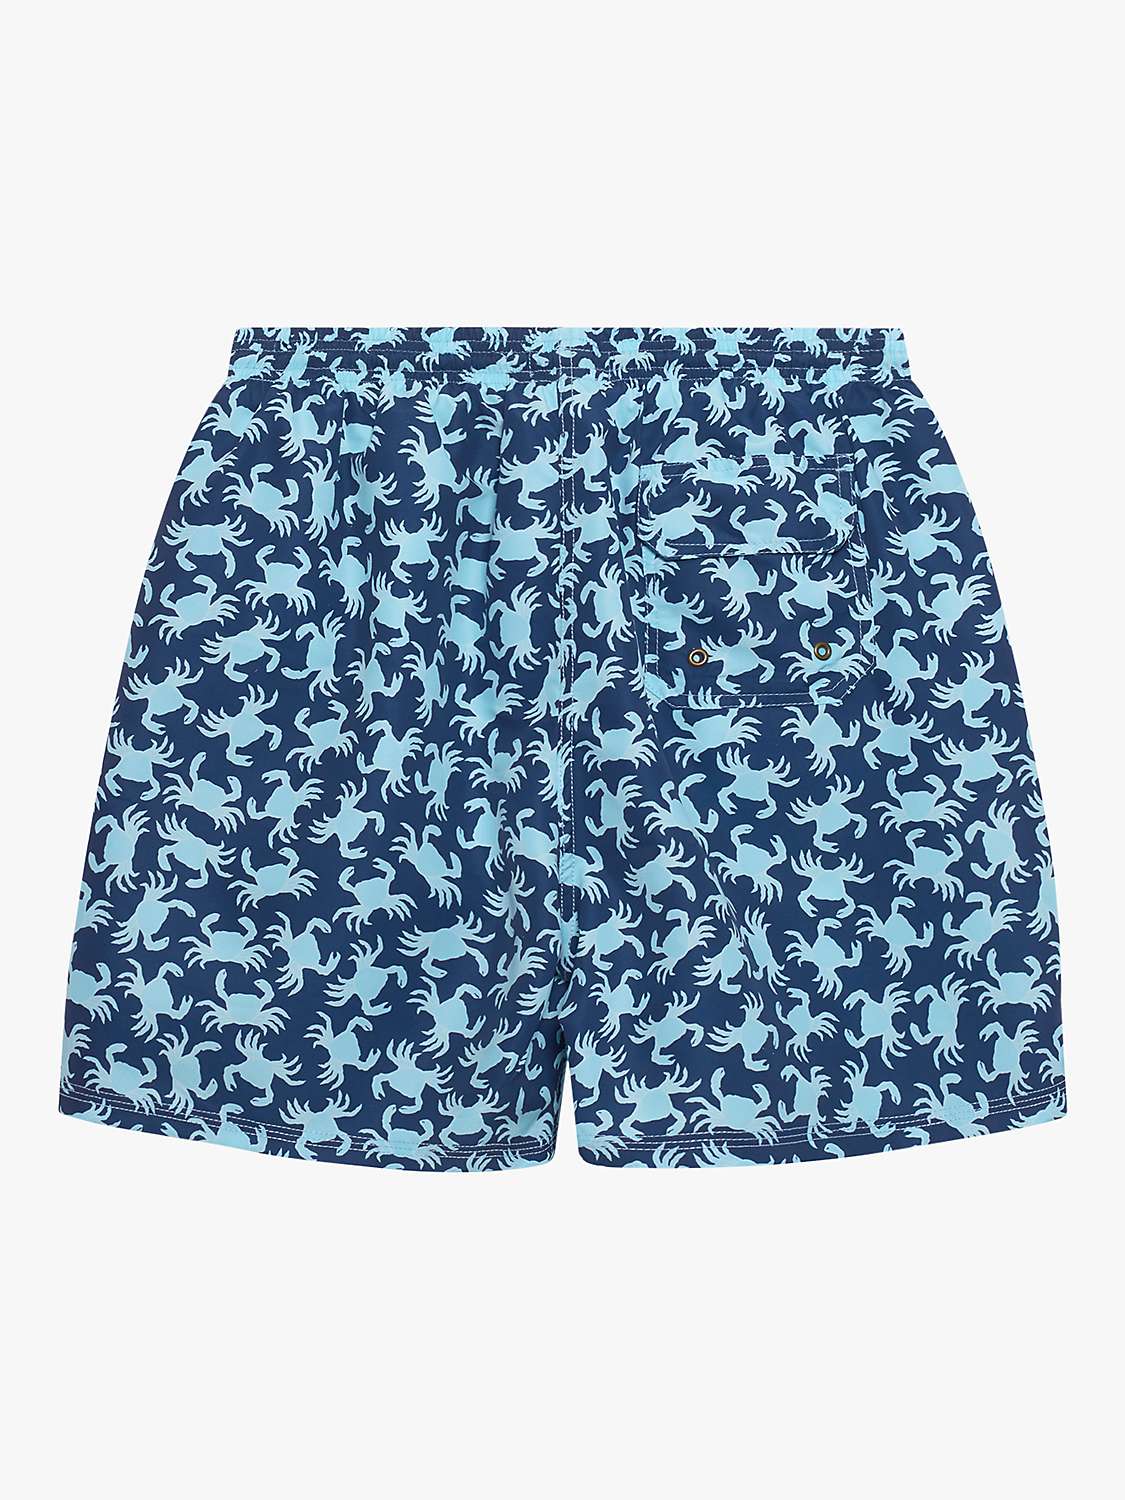 Buy Trotters Crab Swim Shorts, Navy/Aqua Online at johnlewis.com